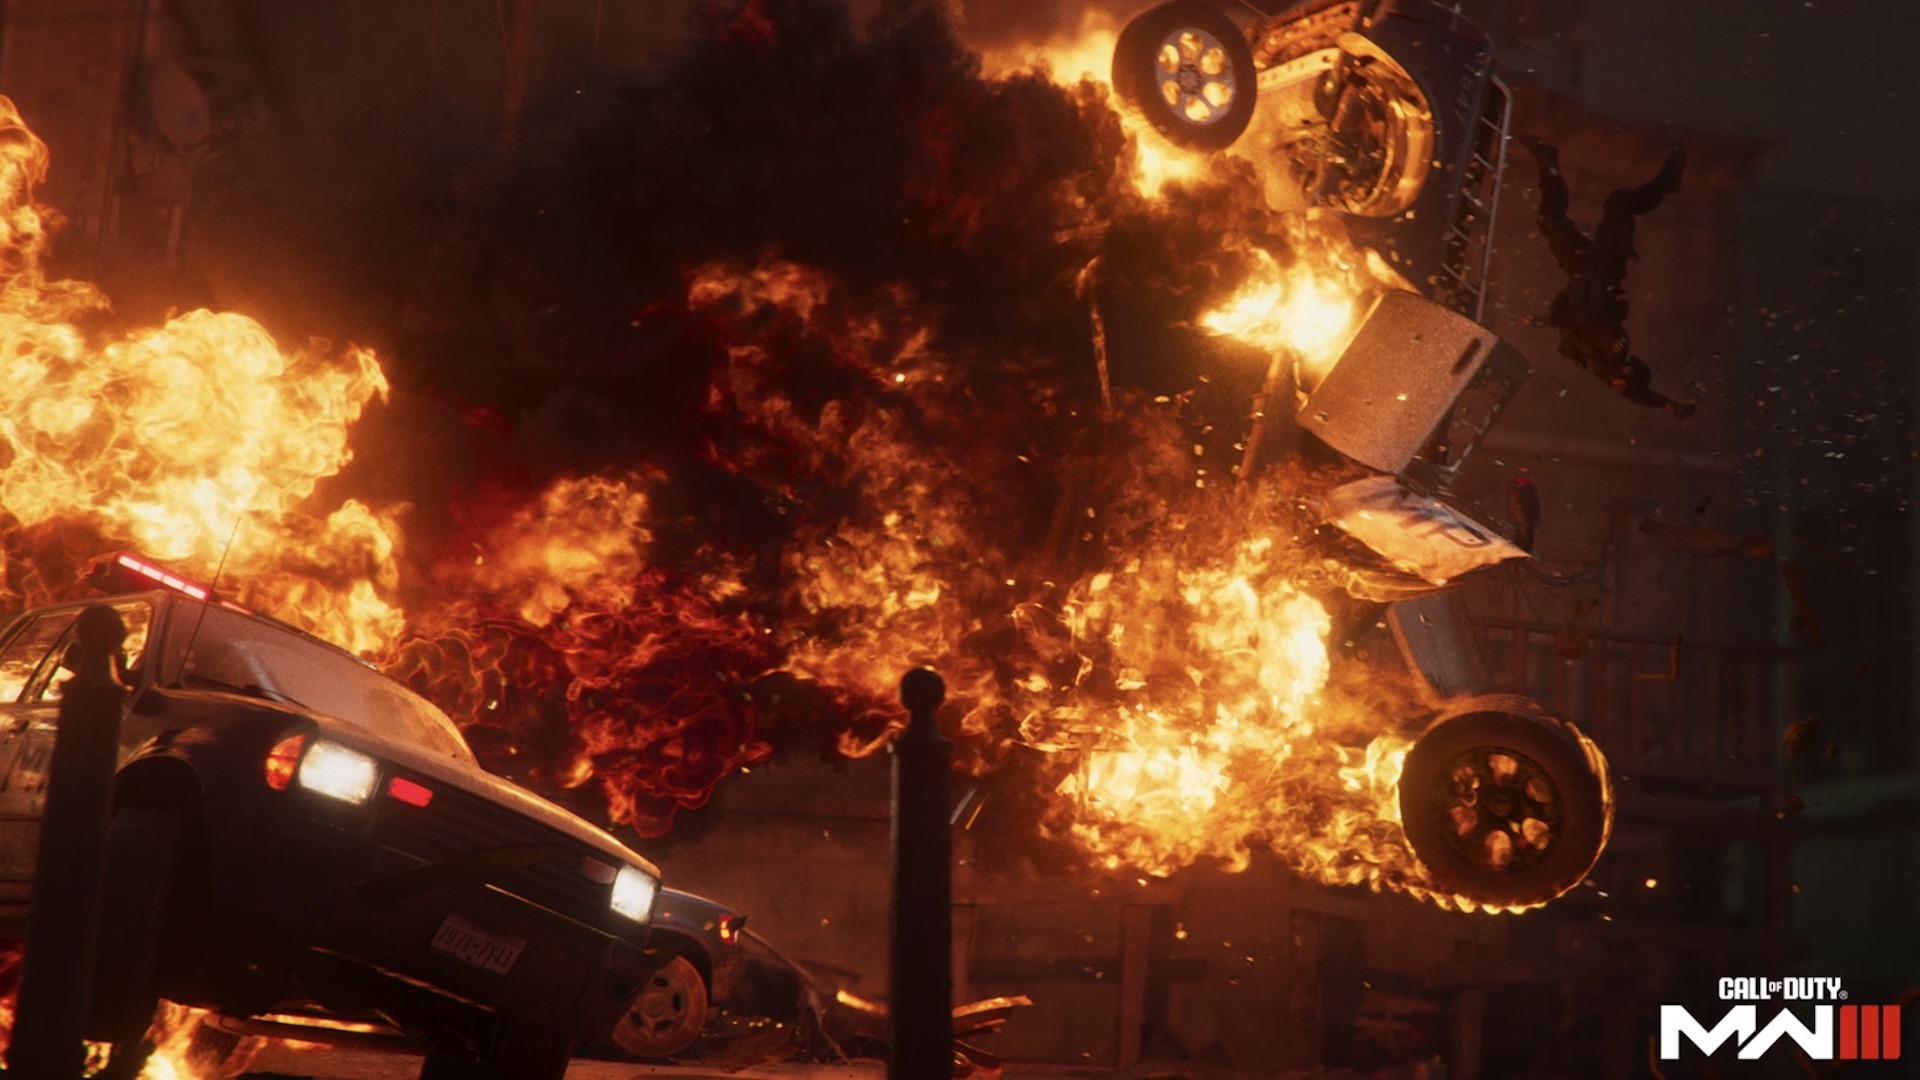 A car explodes, causing a fireball to rise into the air